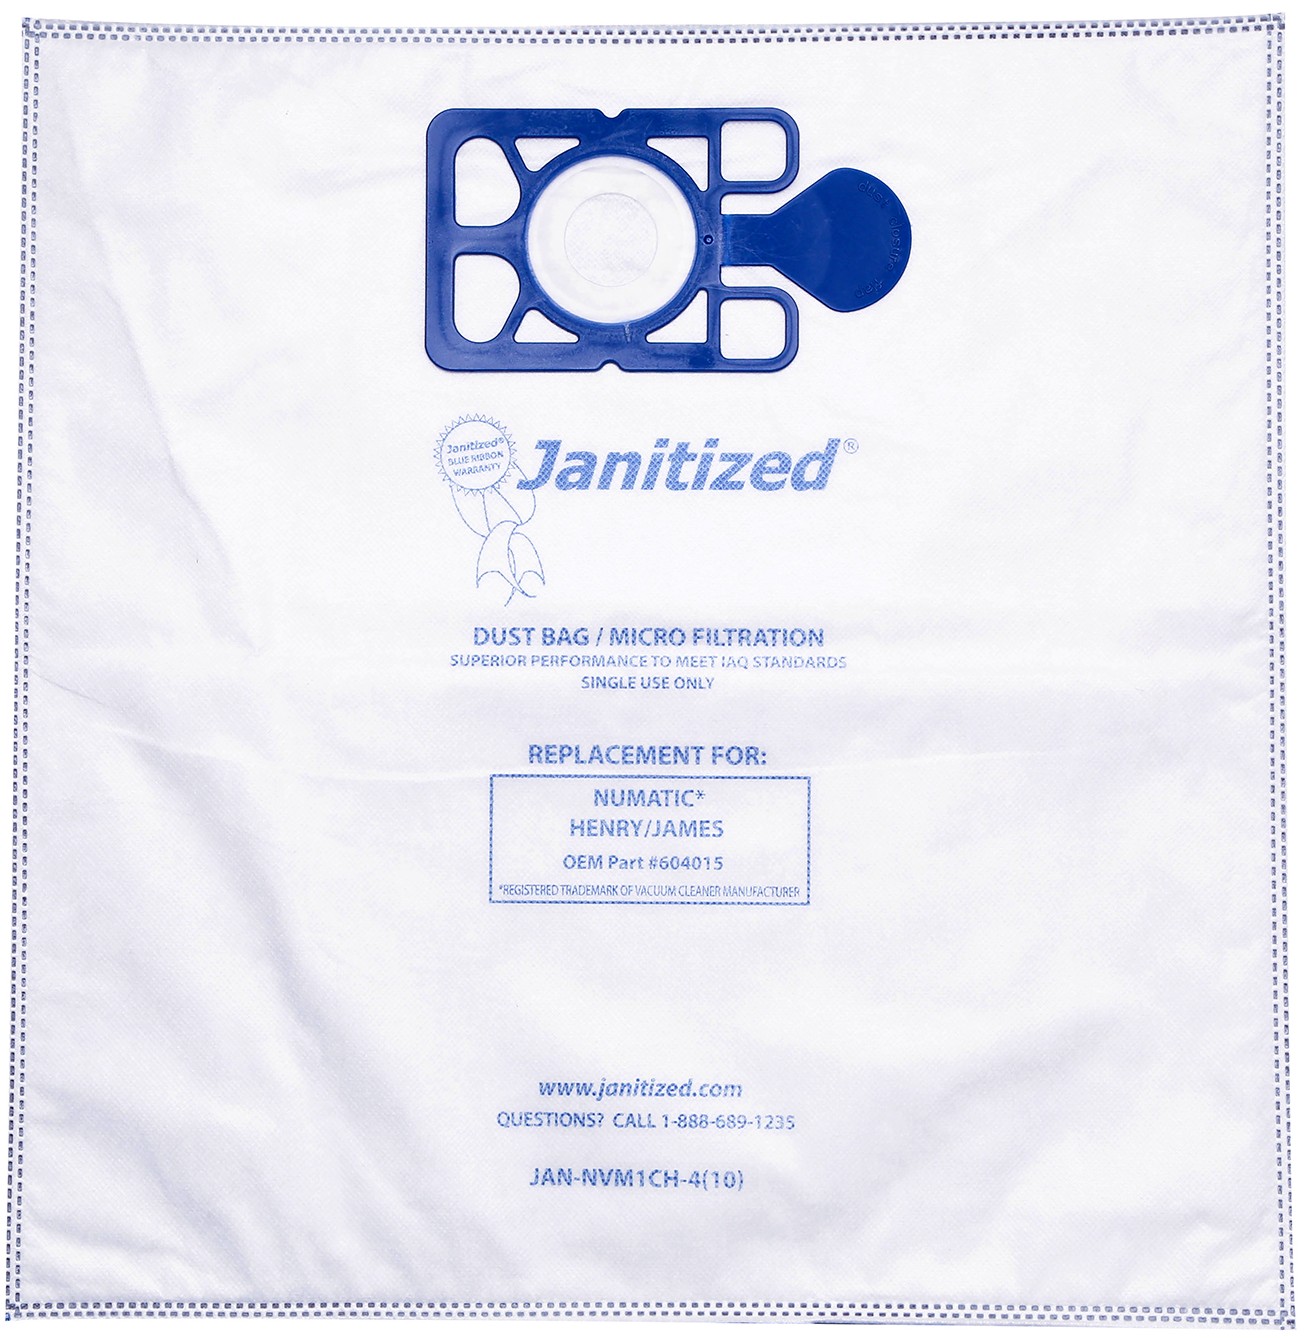 Janitized Hepa Numatic Henry/James Quick Clean Filter Bags 10/PAK